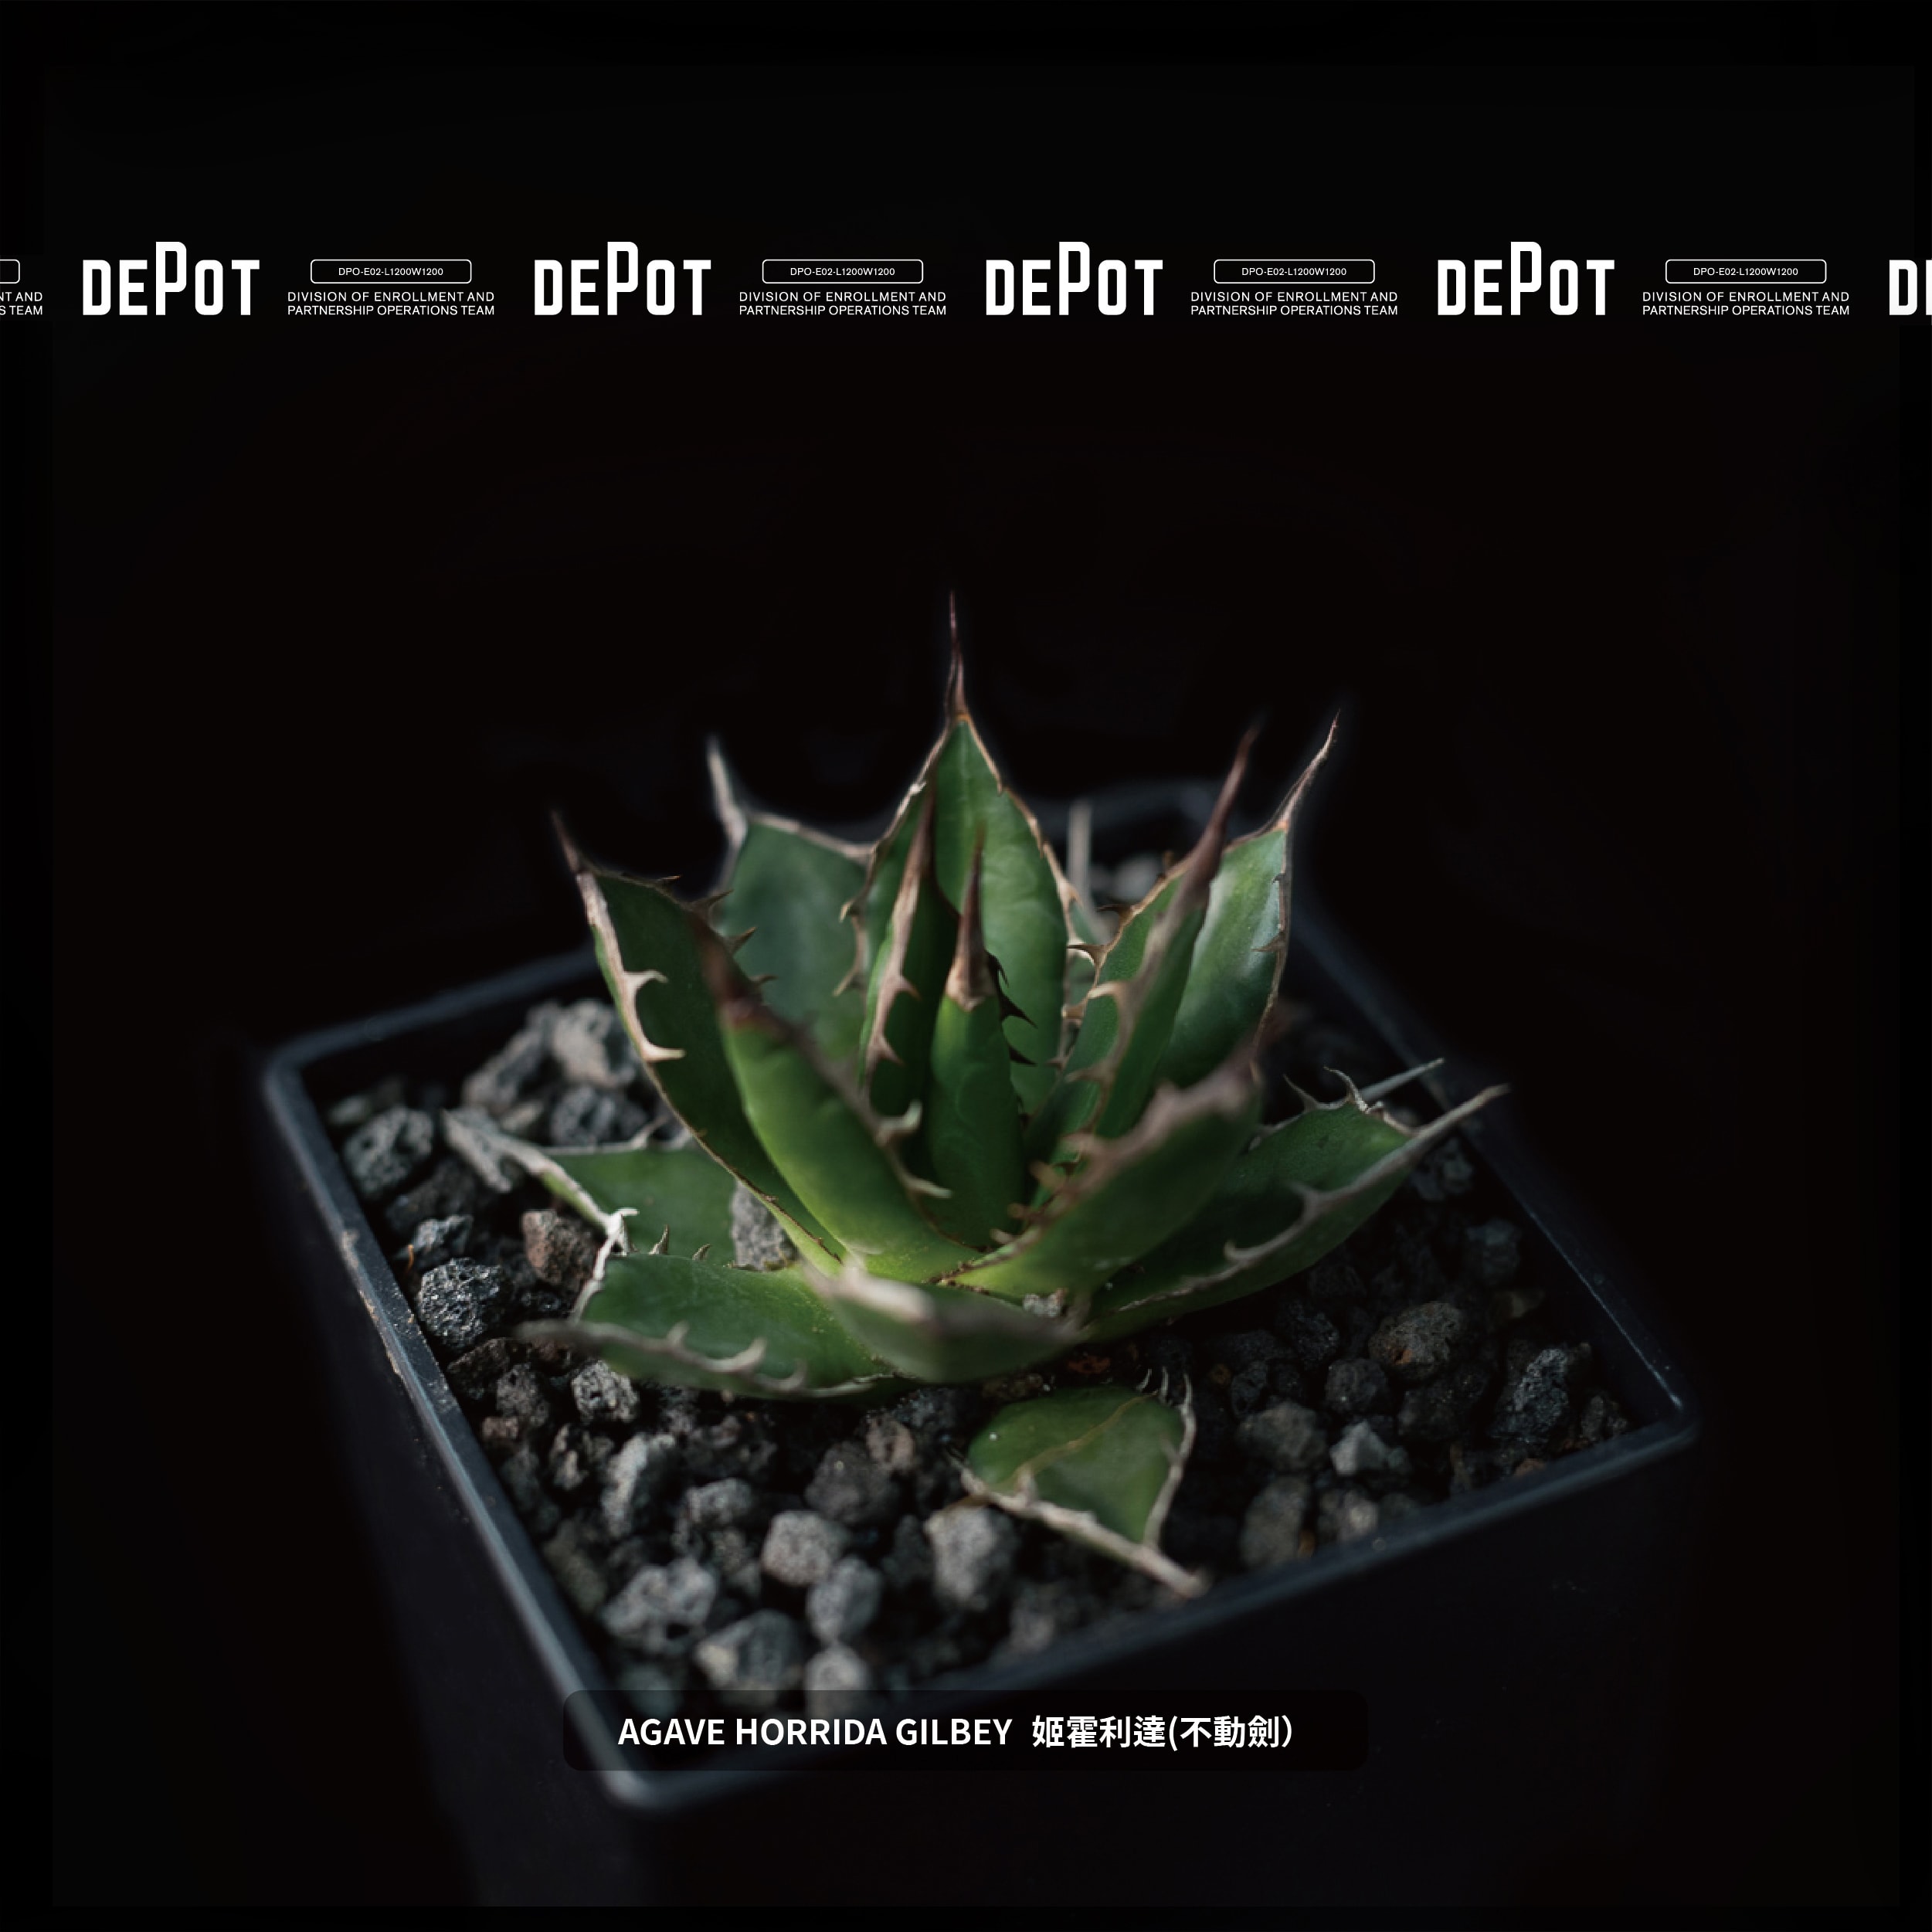 INVINCIBLE 全新生活美感體驗品牌 DEPOT 推出「CAUDEX MARKET 塊根植物市集」